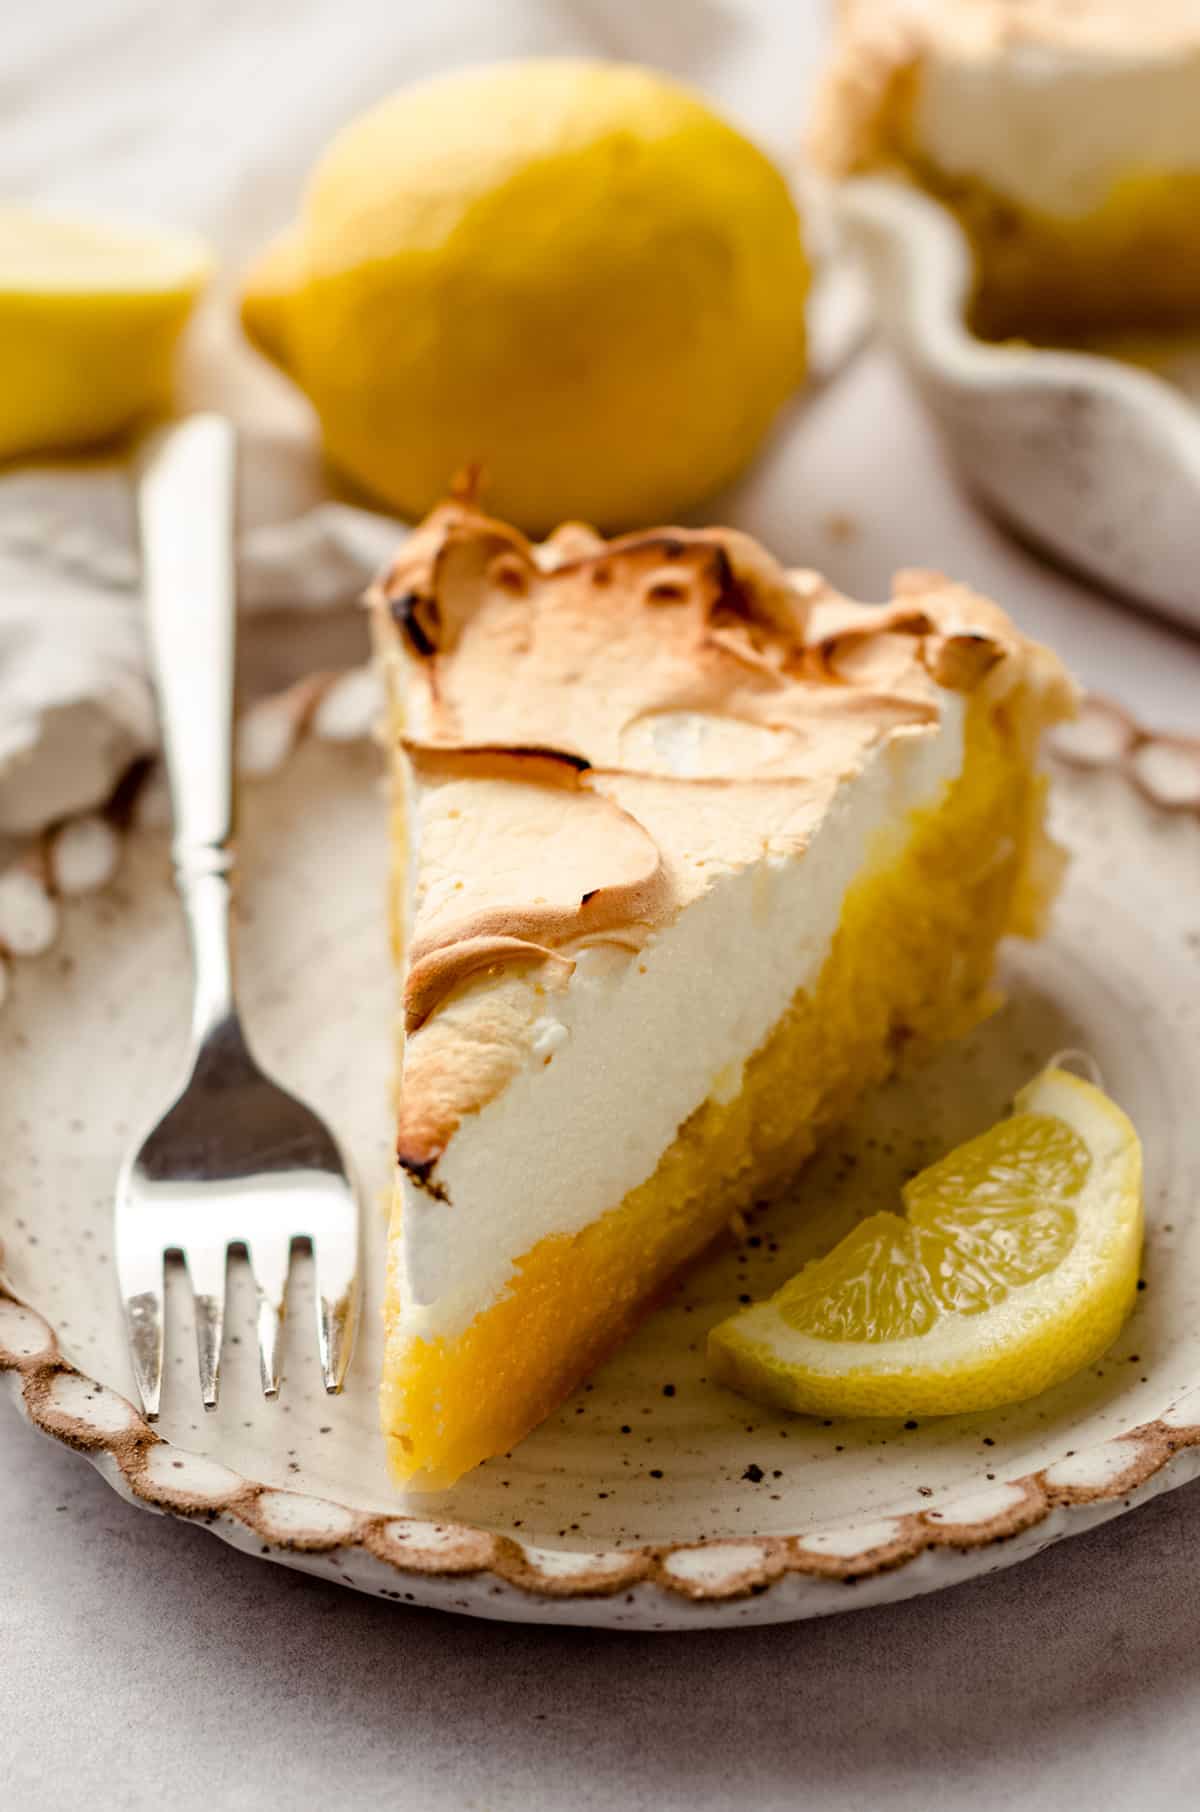 A slice of lemon meringue pie with lemons as garnish.